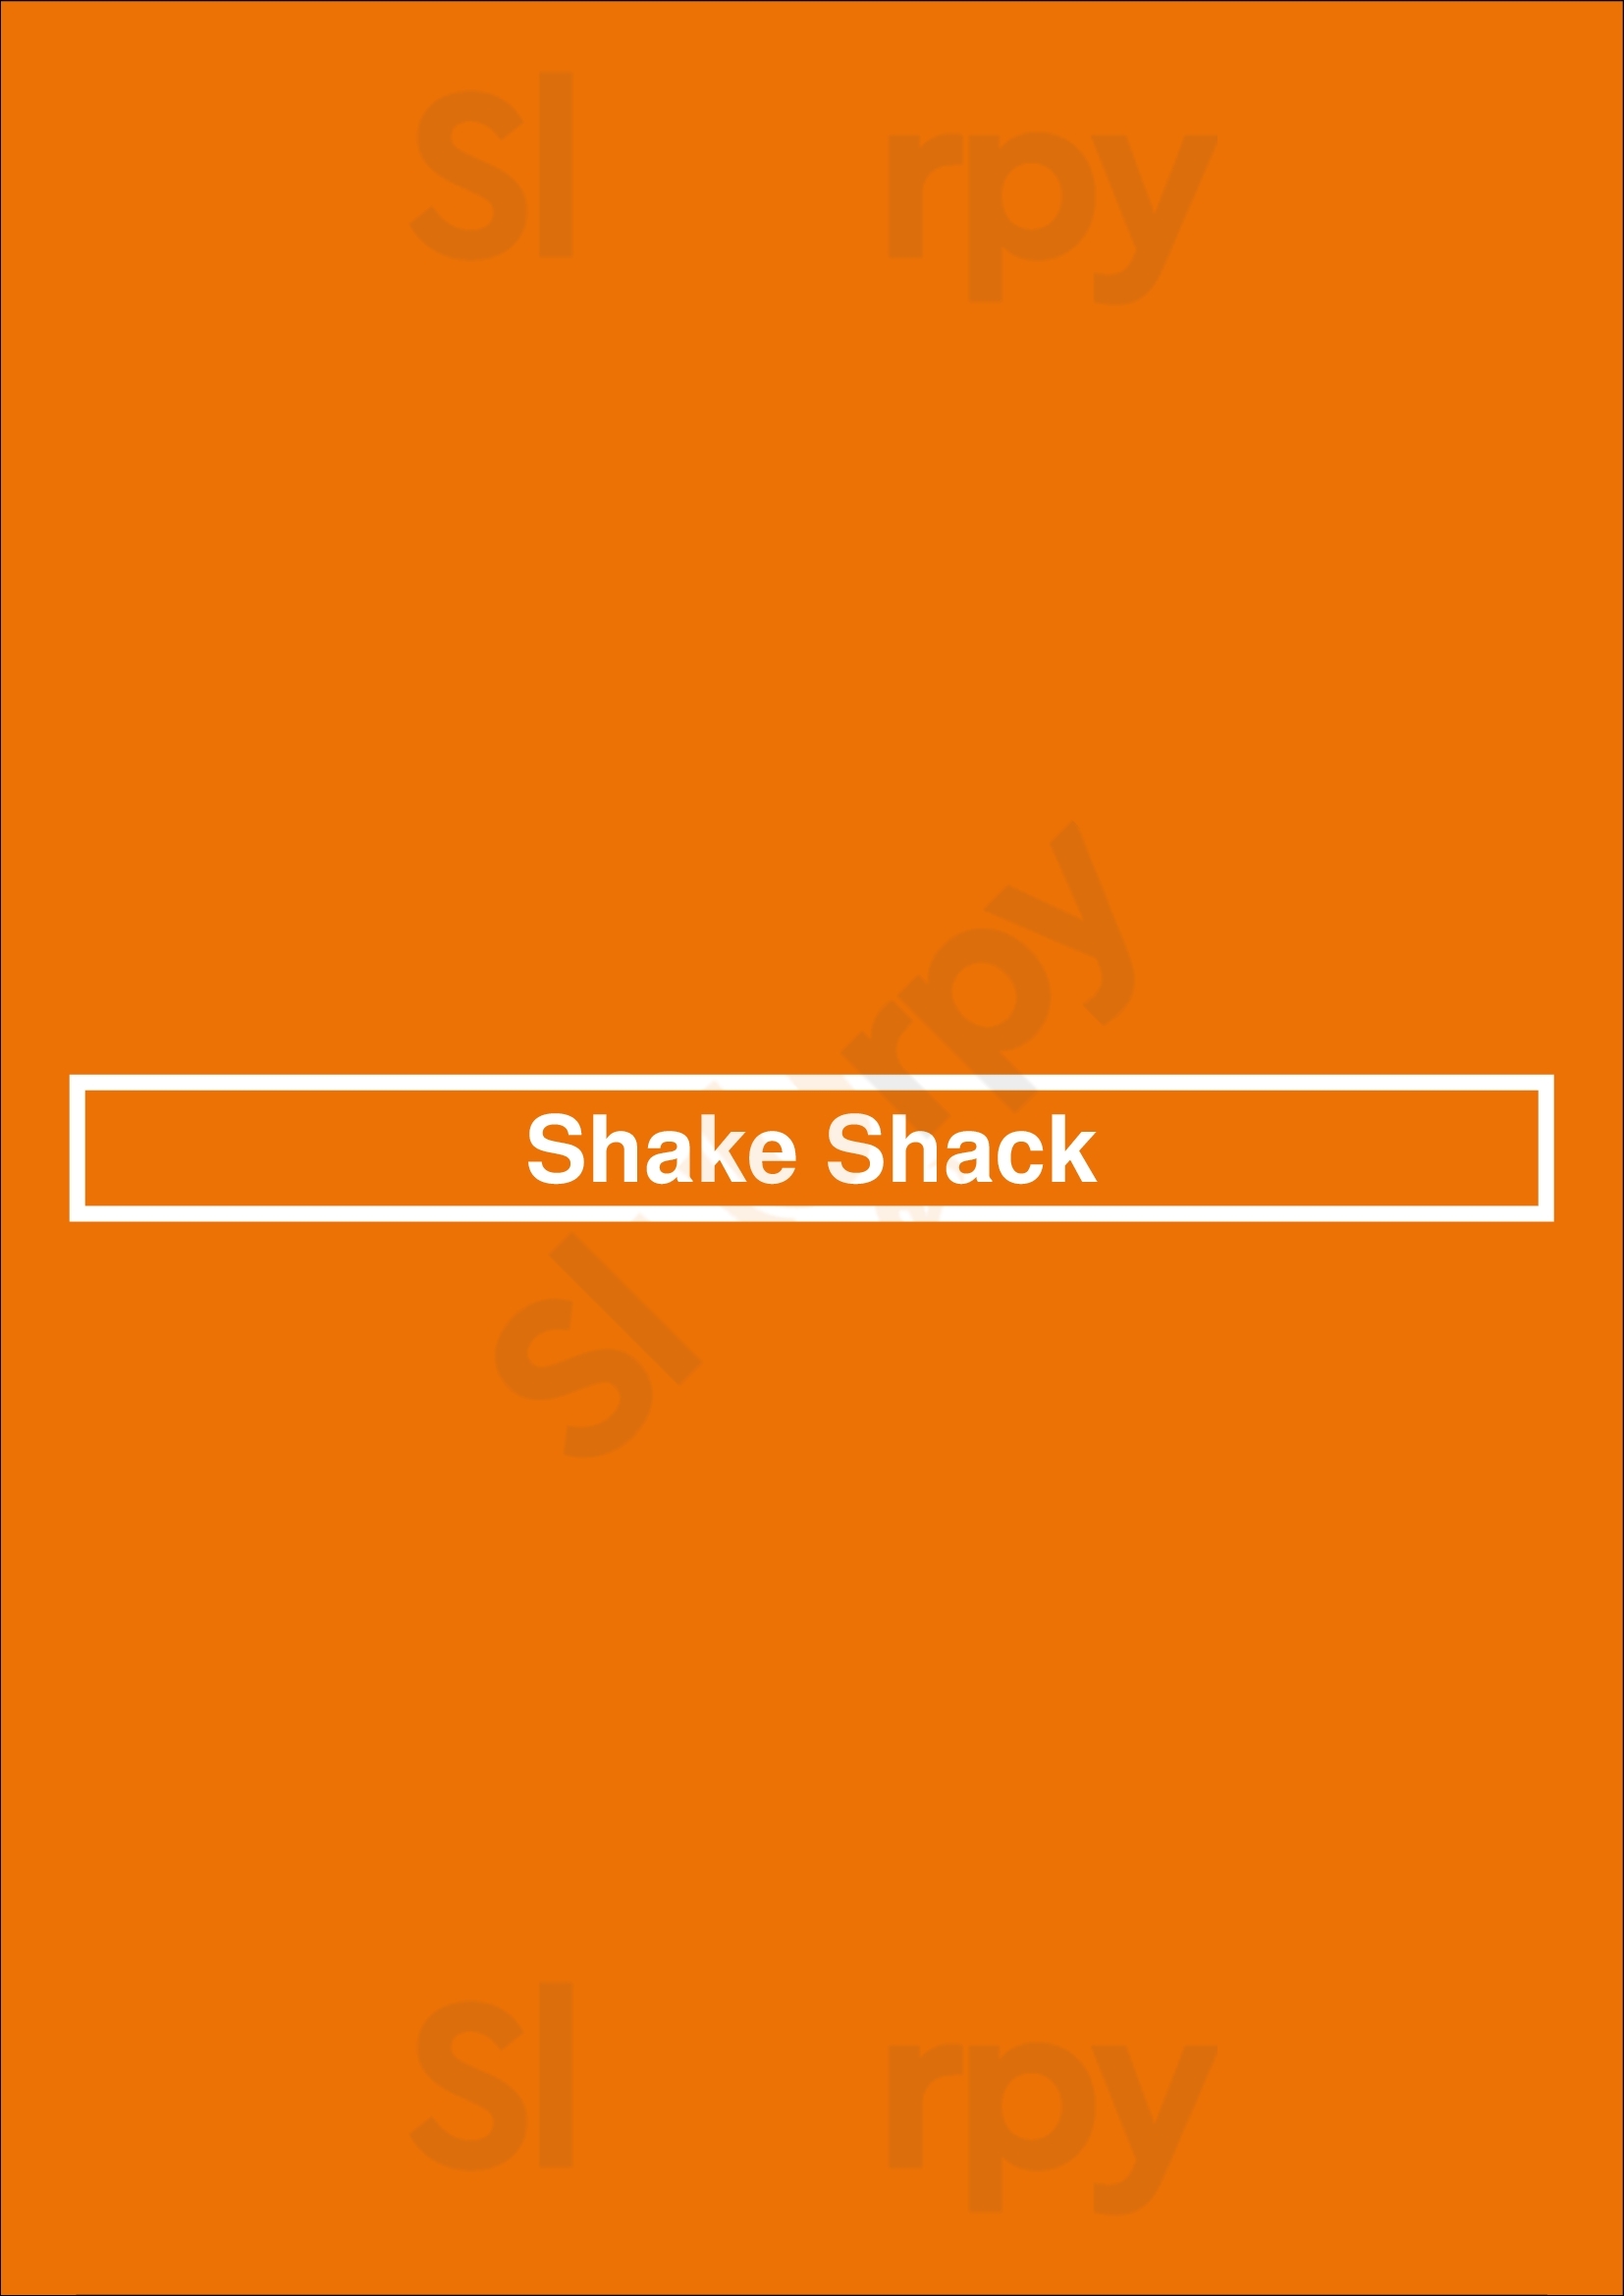 Shake Shack South Beach Miami Miami Beach Menu - 1